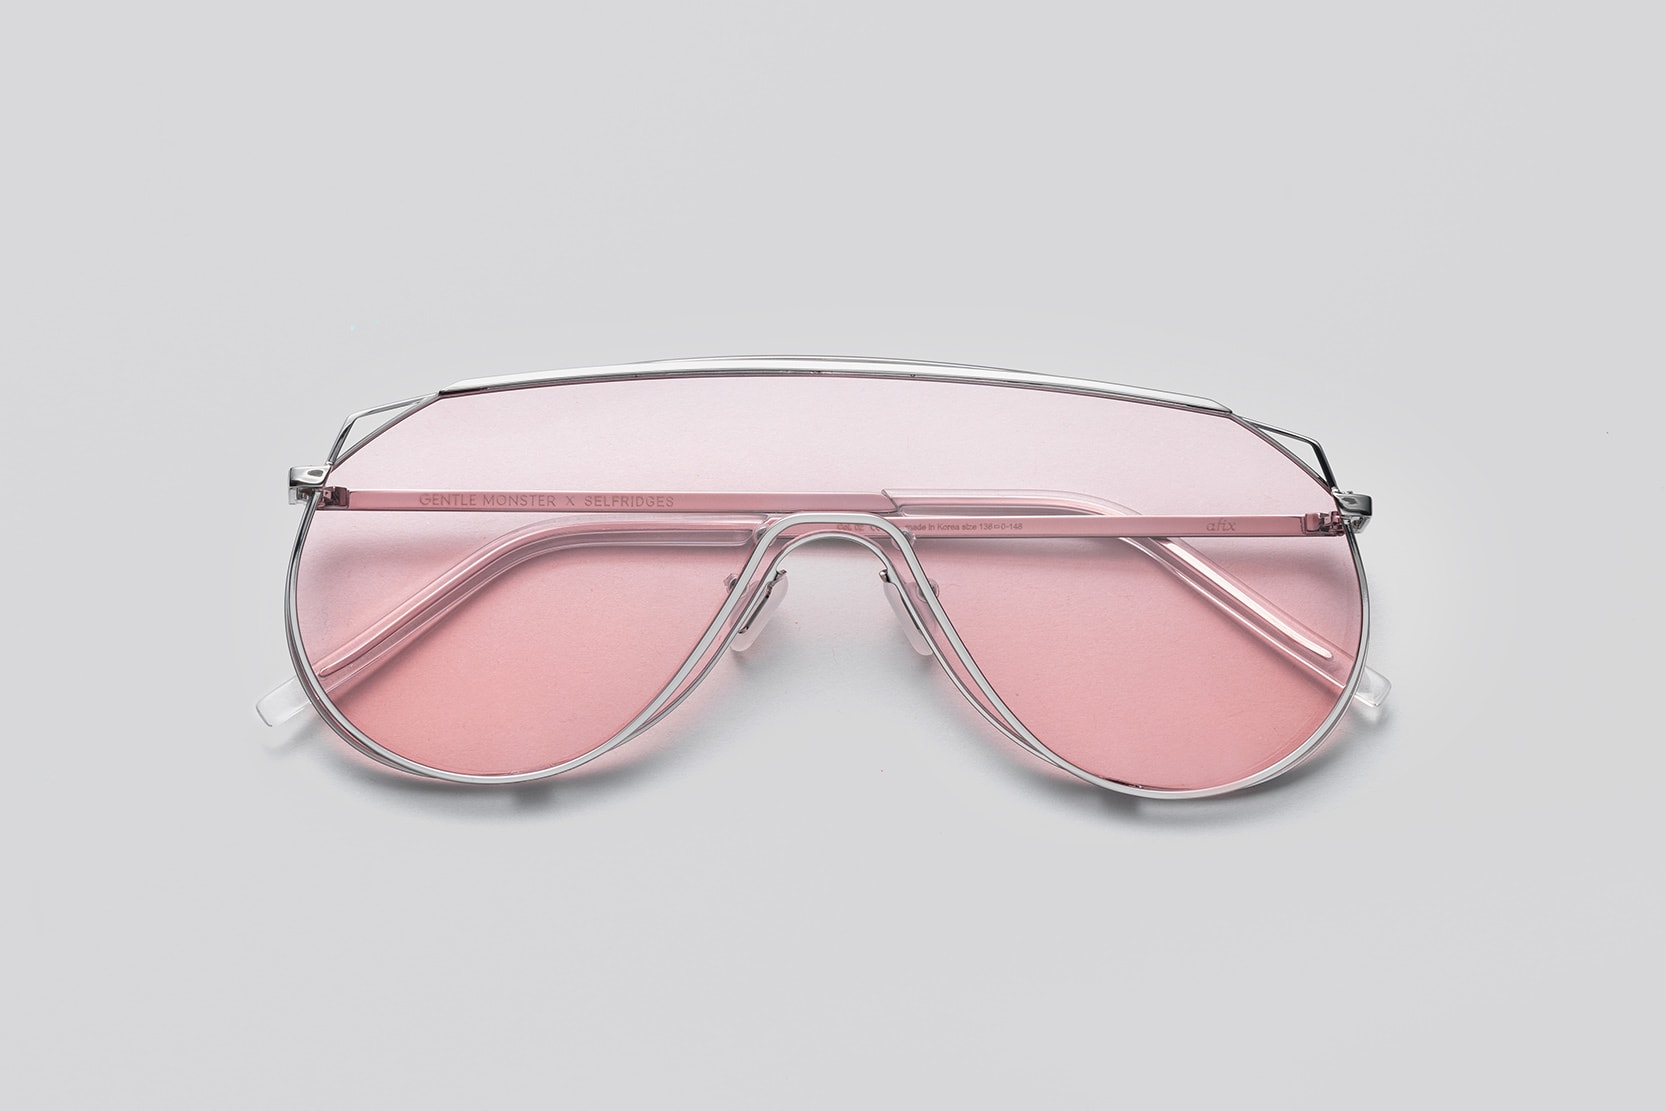 GENTLE MONSTER Selfridges Collab Collaboration Details Pop-Up Store Exclusive Capsule Collection Eyewear 3 Colorways Afix Frame